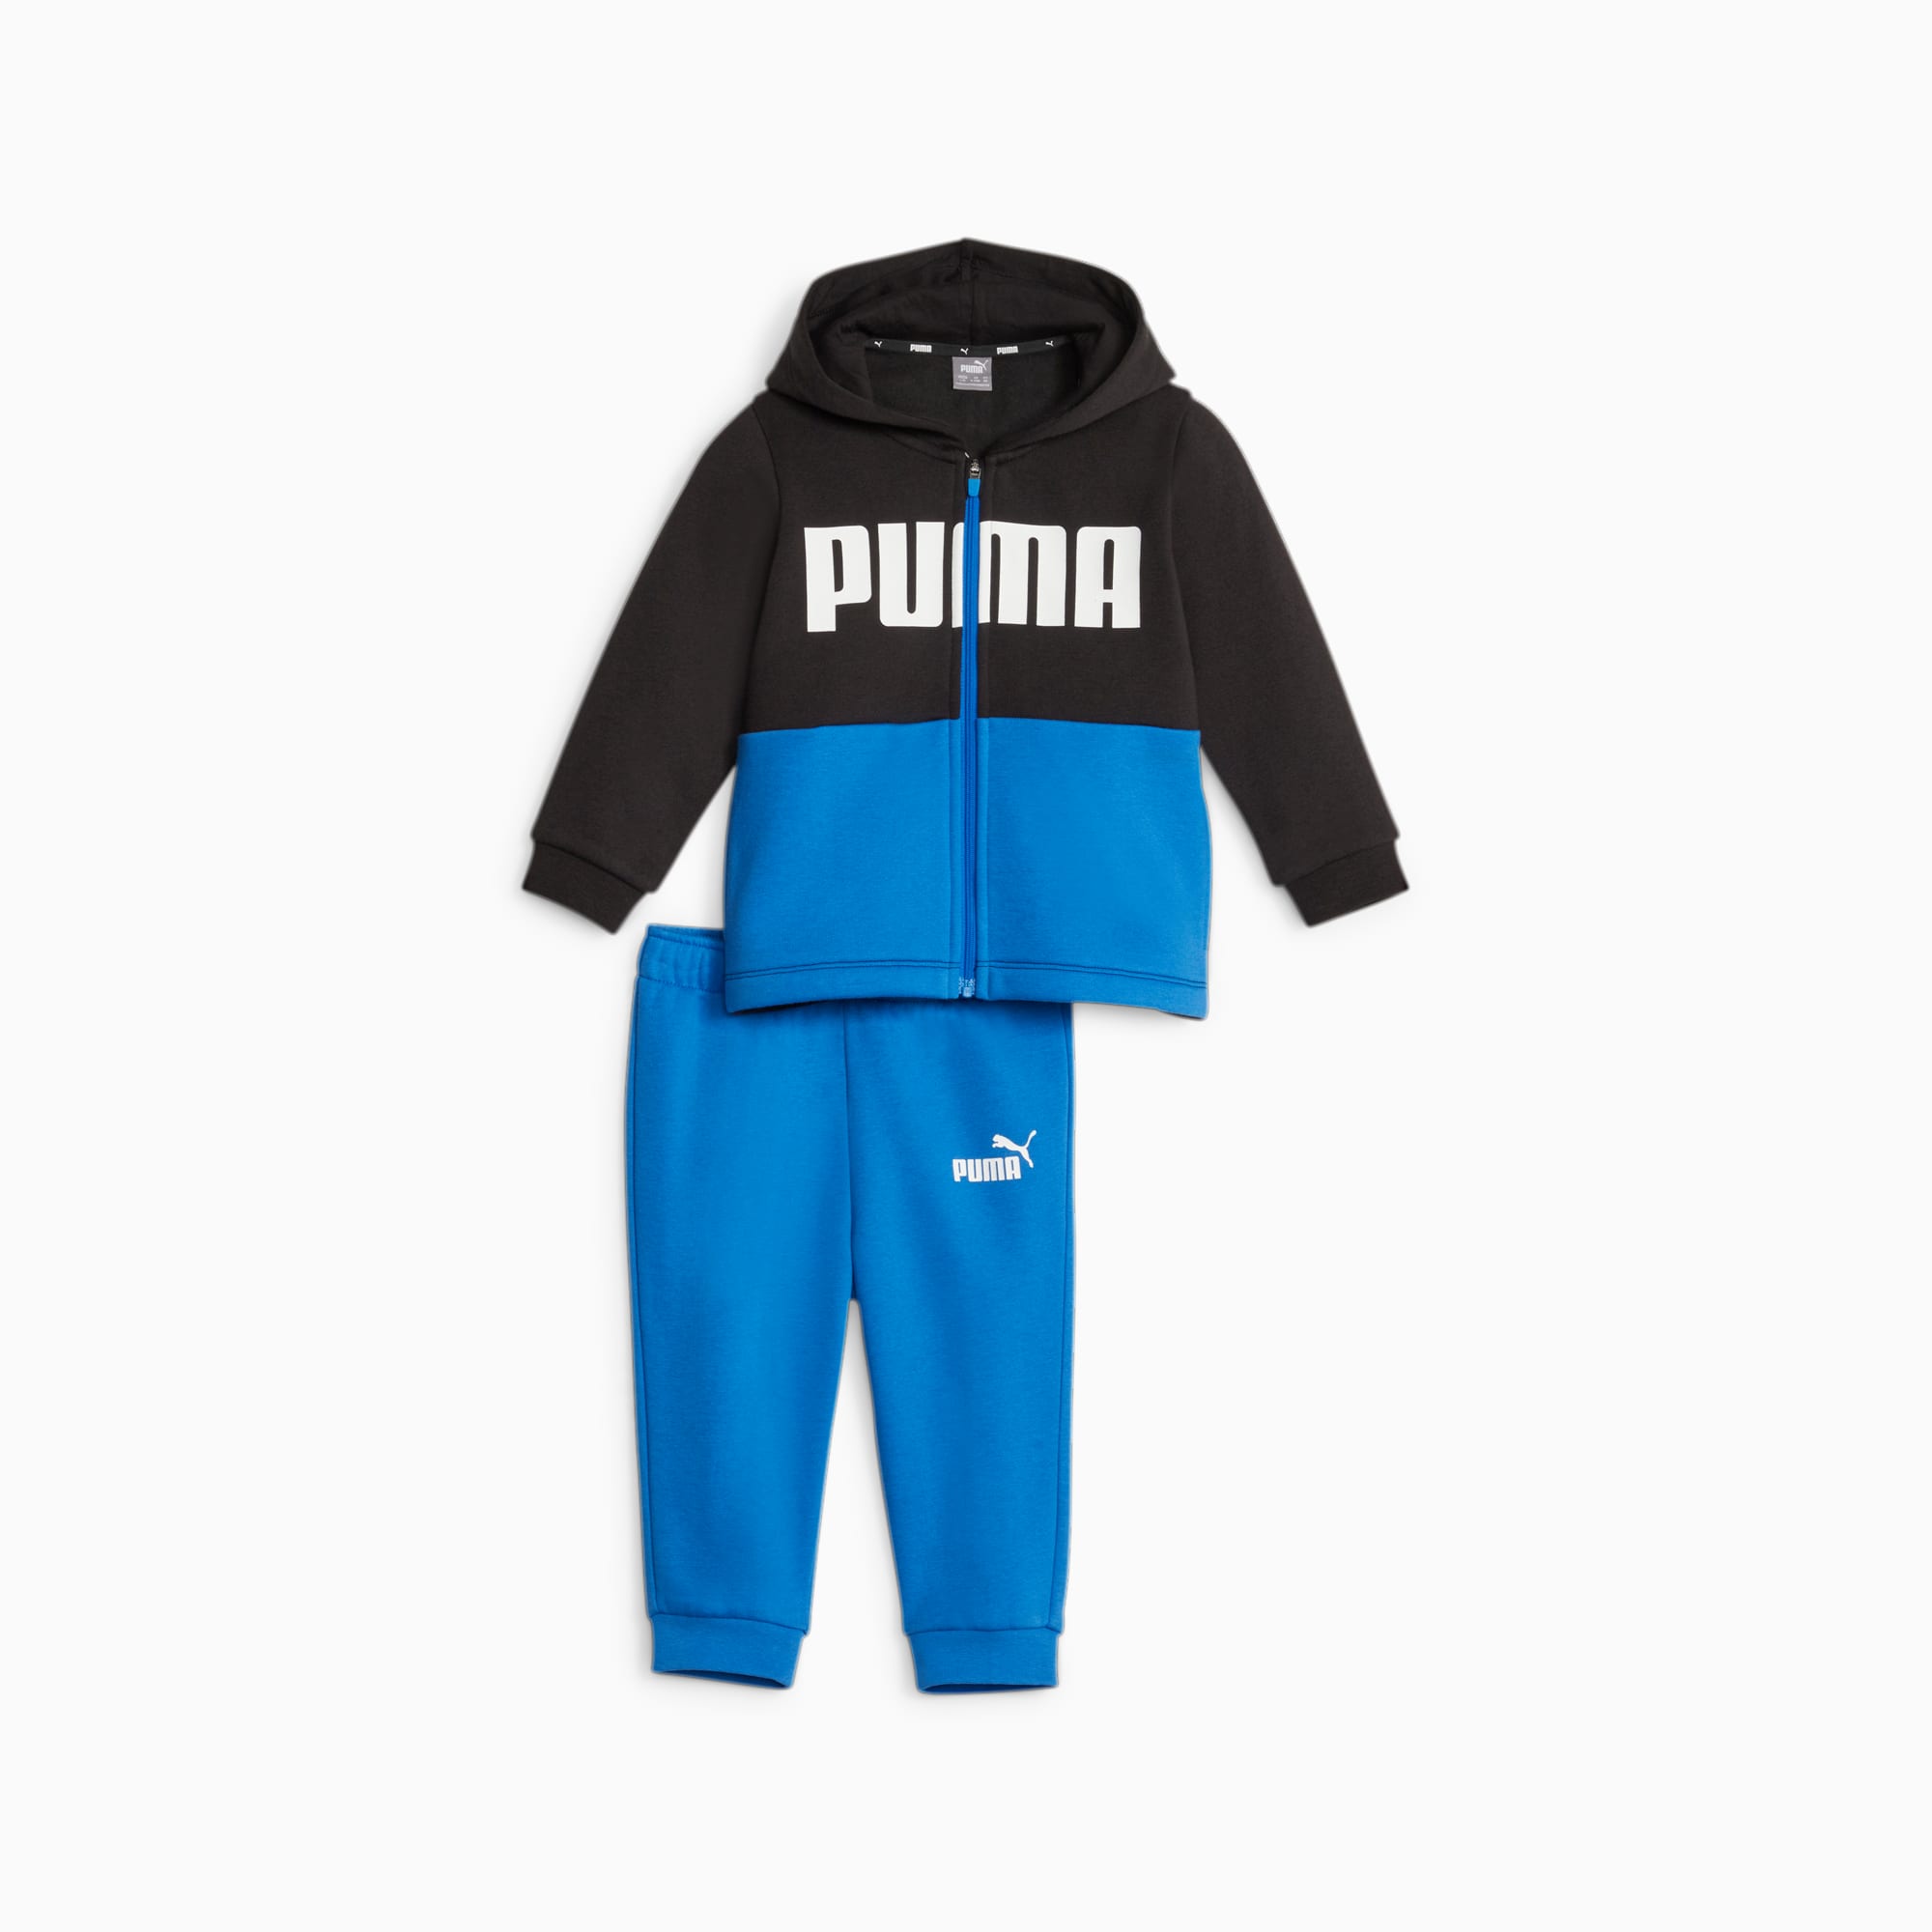 PUMA Minicats Colourblock Jogginganzug Baby Für Kinder, Blau, Größe: 74, Kleidung